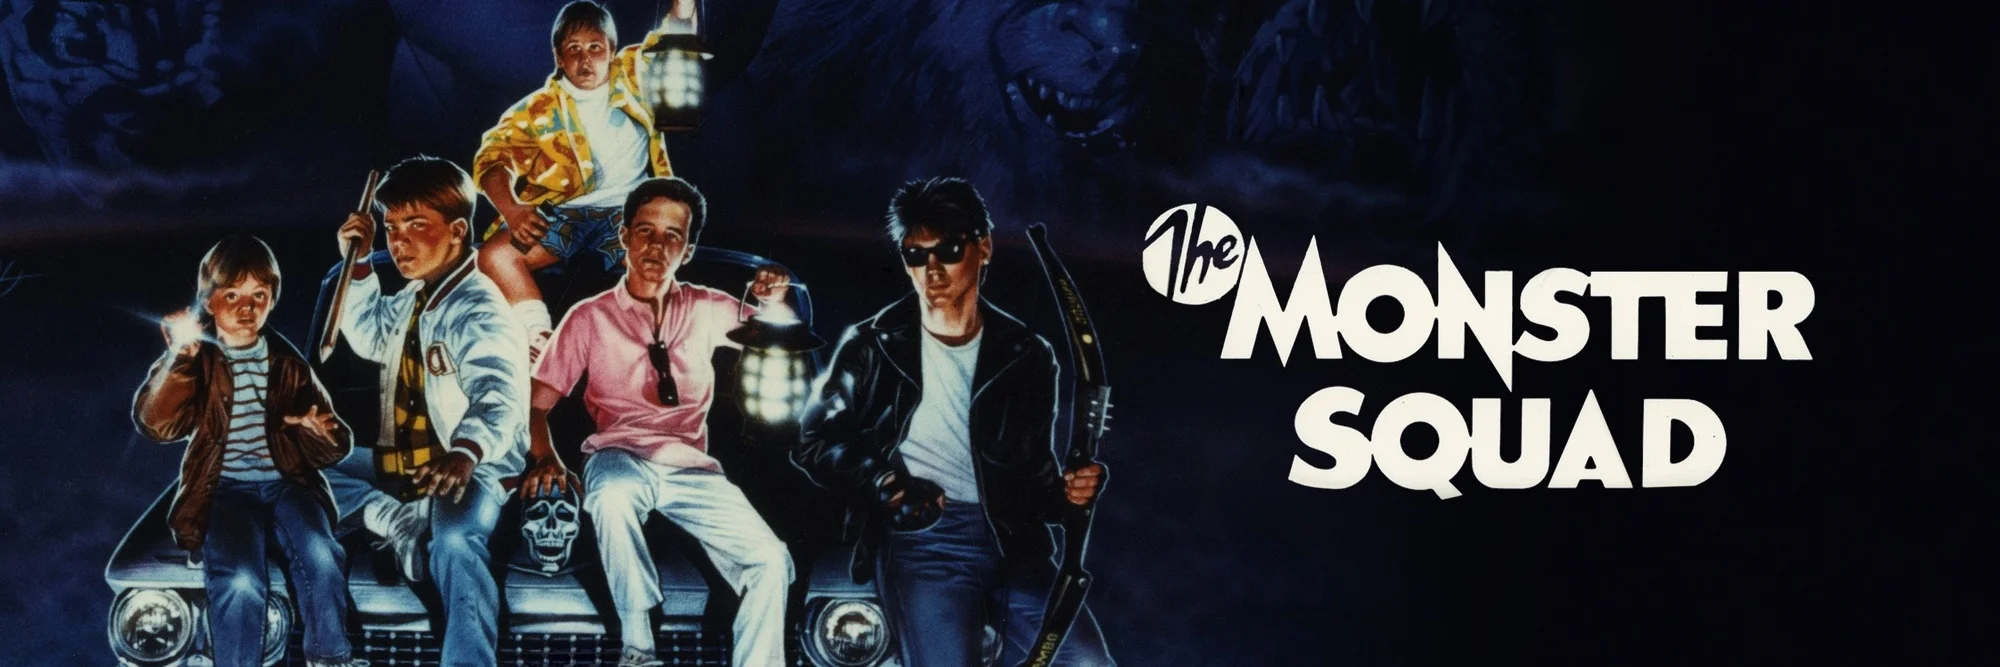 The Monster Squad 4K 1987 big poster